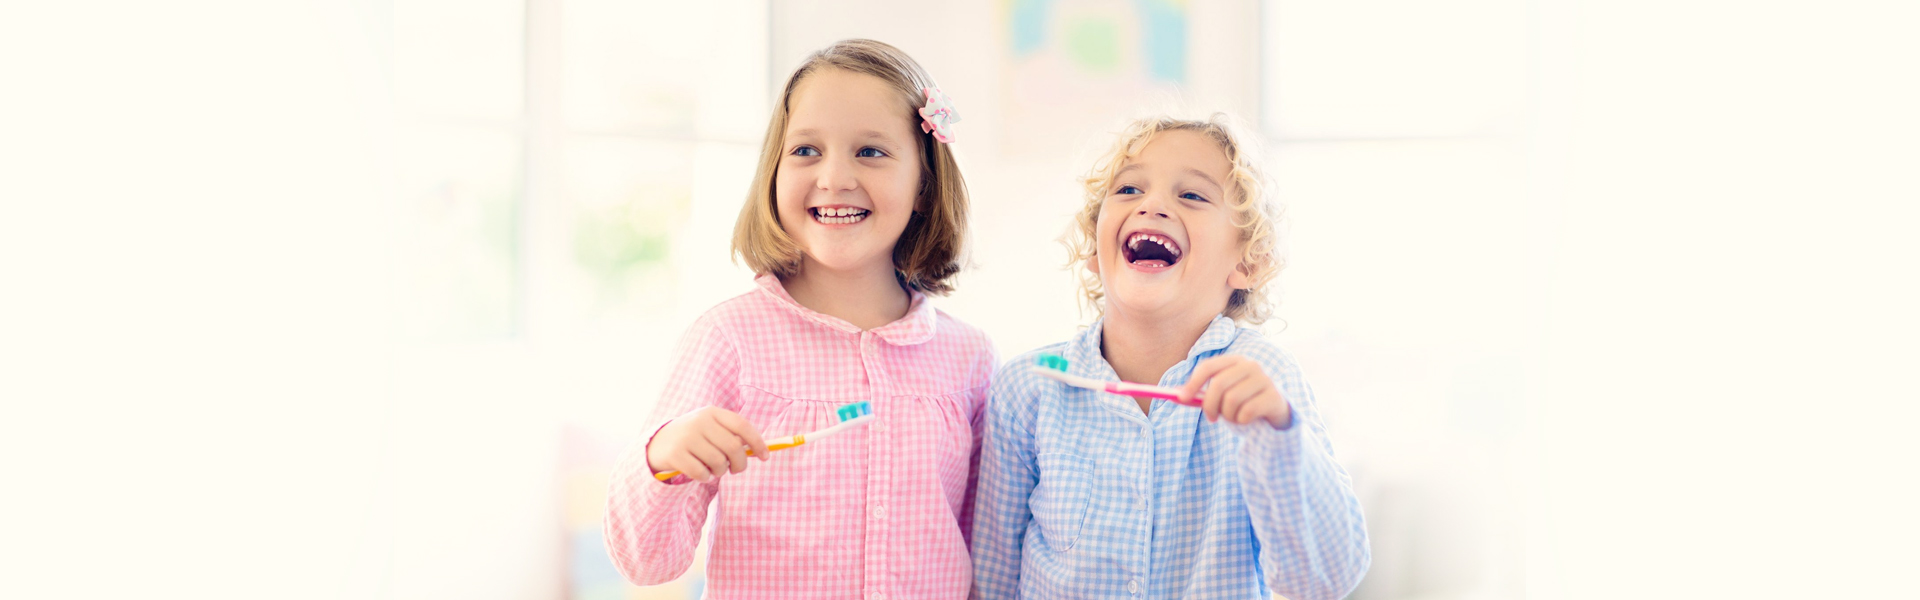 10 Ways to Save Your Kid’s Teeth